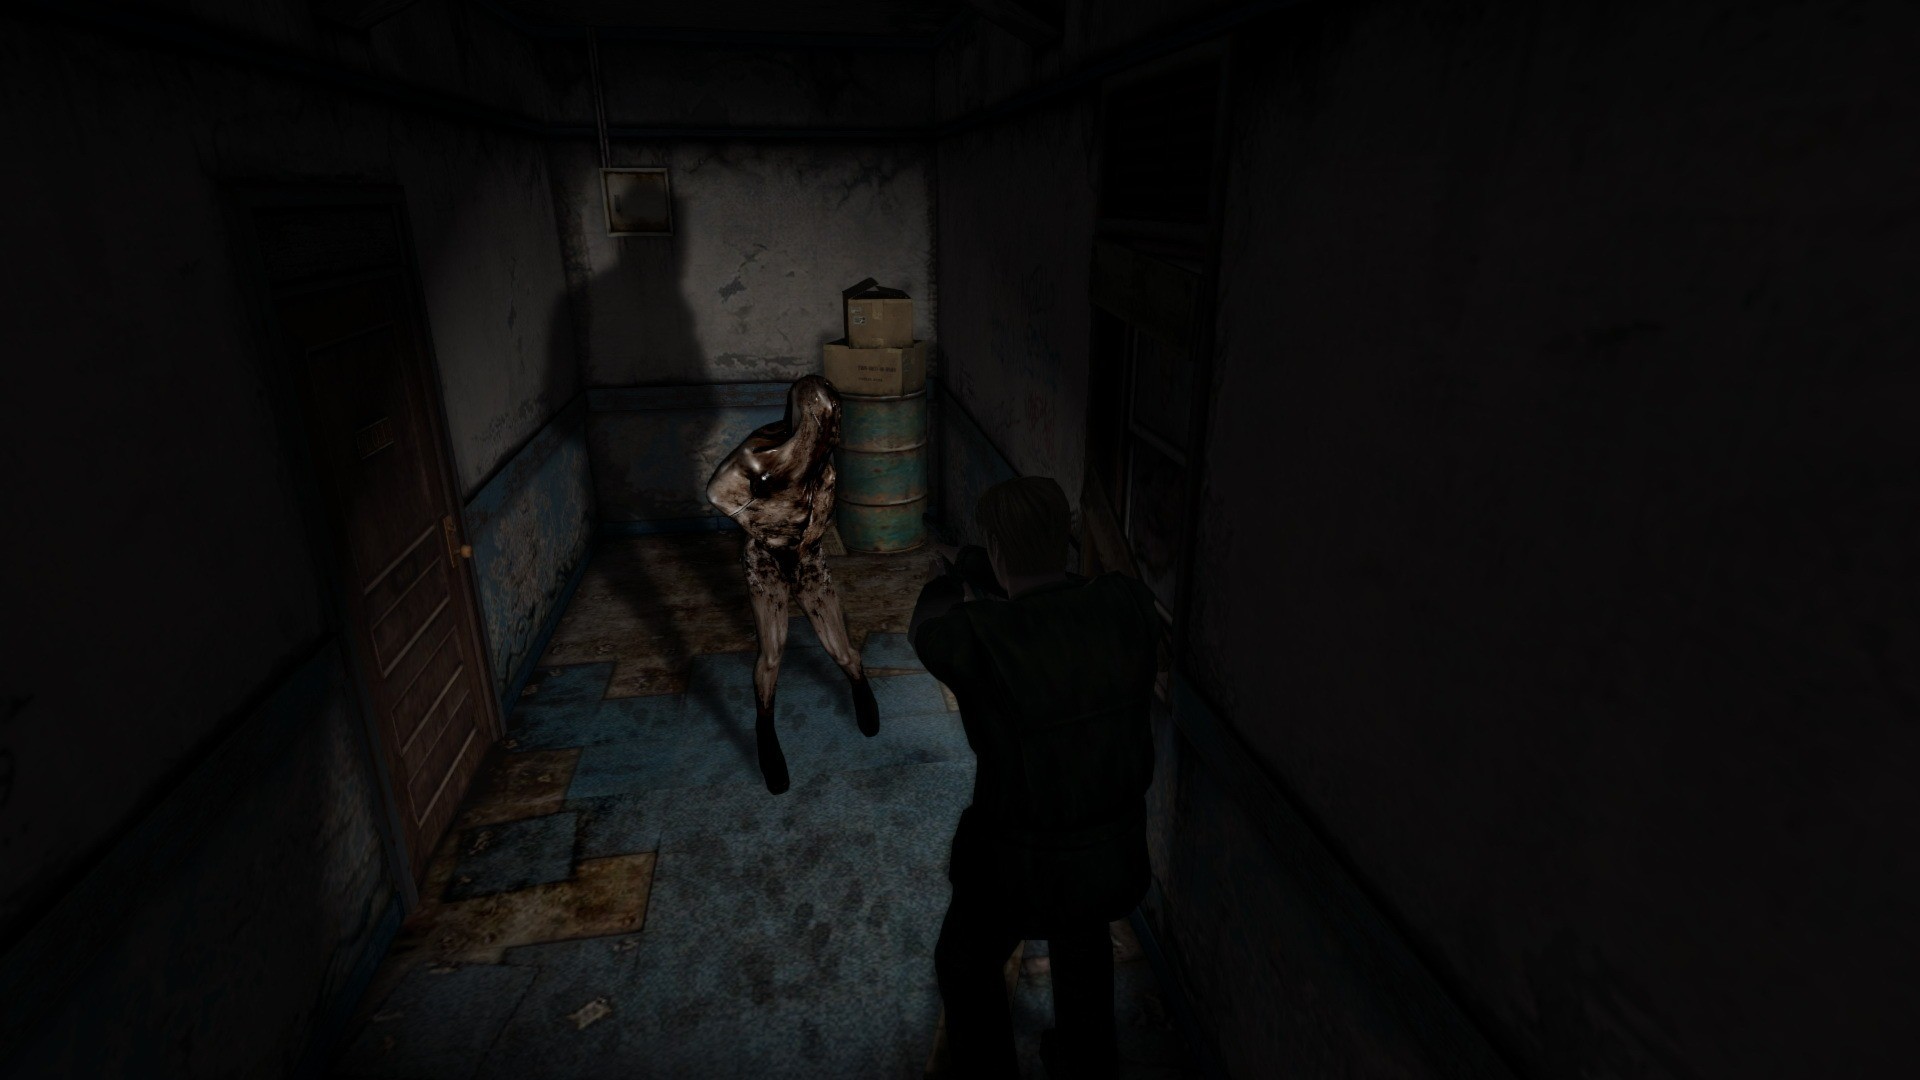 Silent Hill 2 - A Kojima Production 